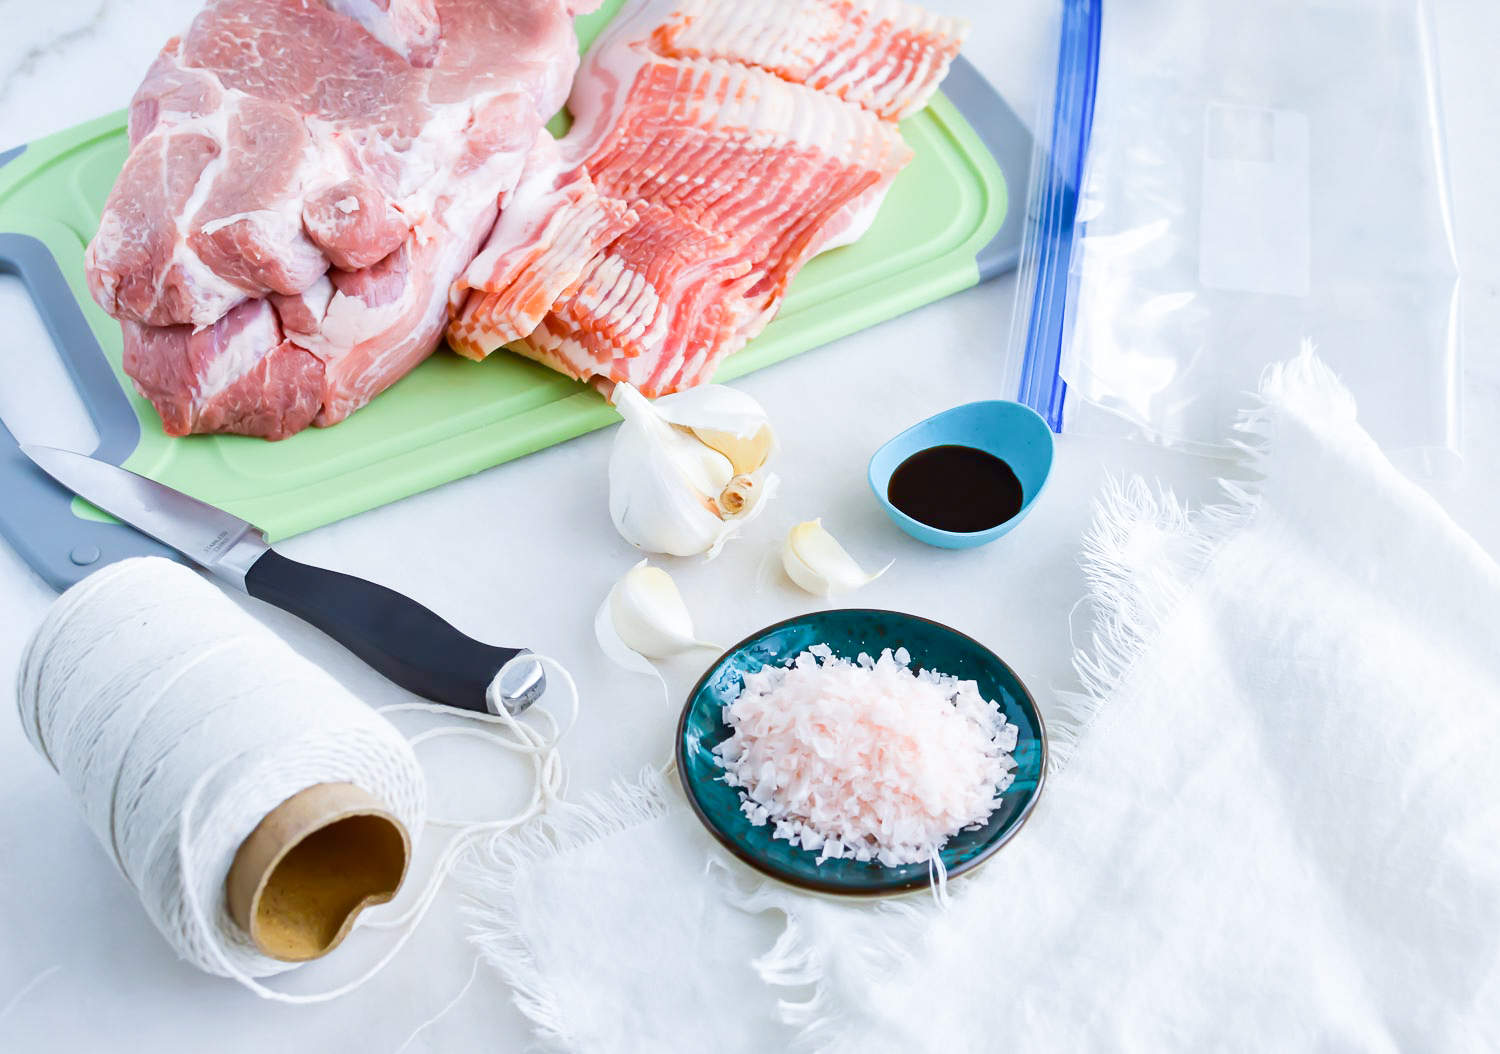 Ingredients for Kalua pork recipe - pork butt, bacon, garlic, salt, twine, and a knife.